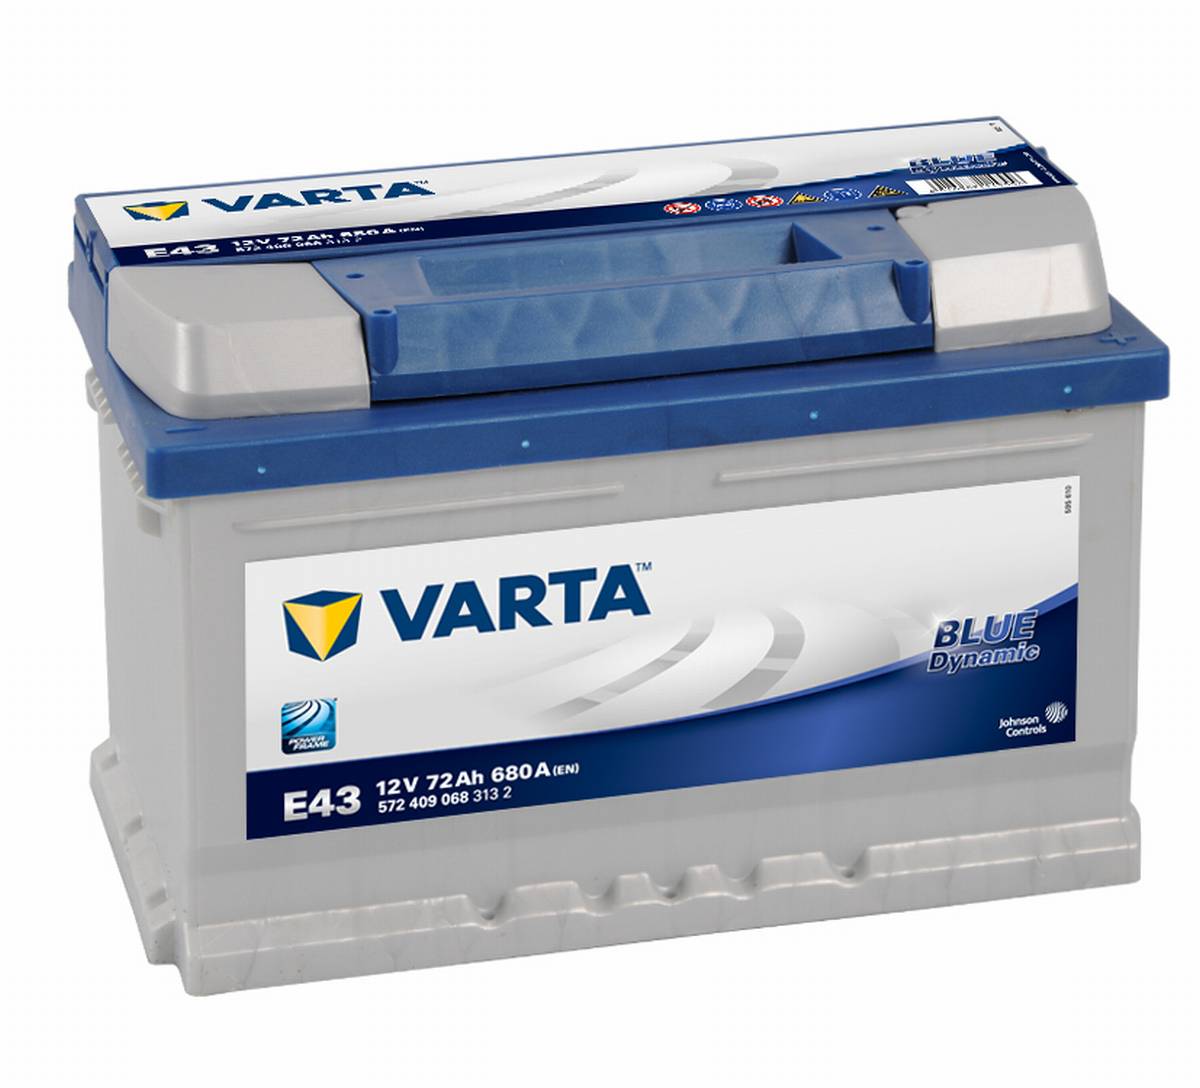 VARTA E43 Blue Dynamic 12V 72Ah 680A Autobatterie 572 409 068, Starterbatterie, Boot, Batterien für